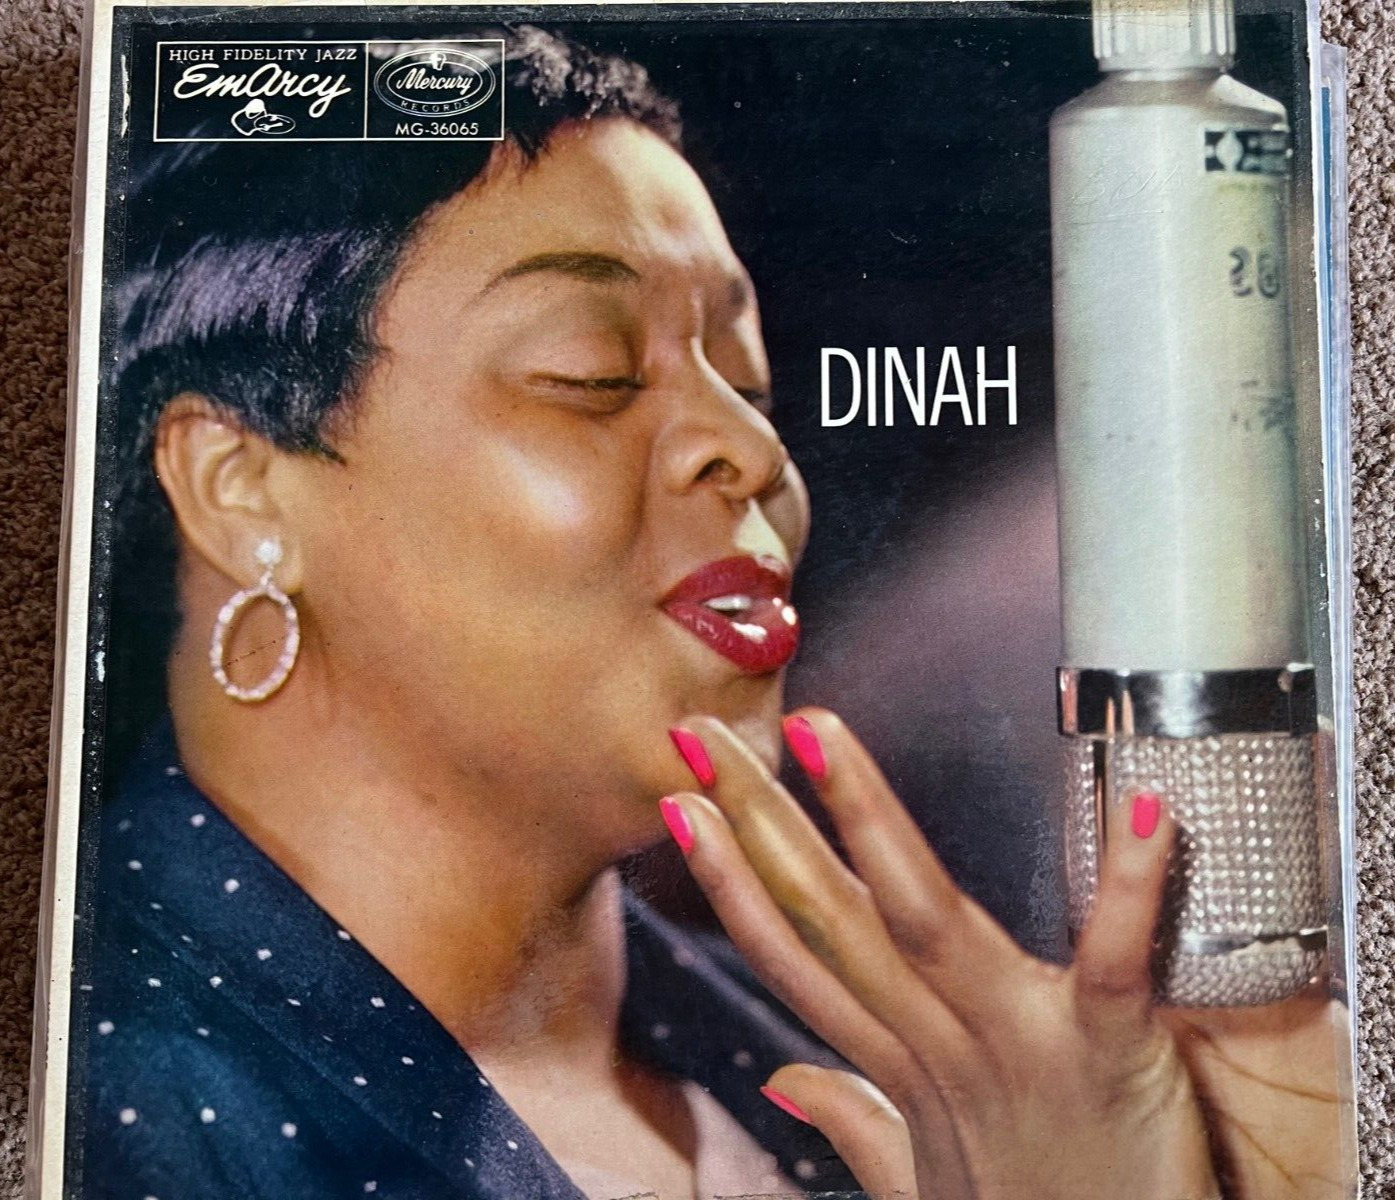 DINAH WASHINGTON - DINAH - MERCURY (EMARCY) RECORDS - 1958 PRESS - VOCALS - MONO